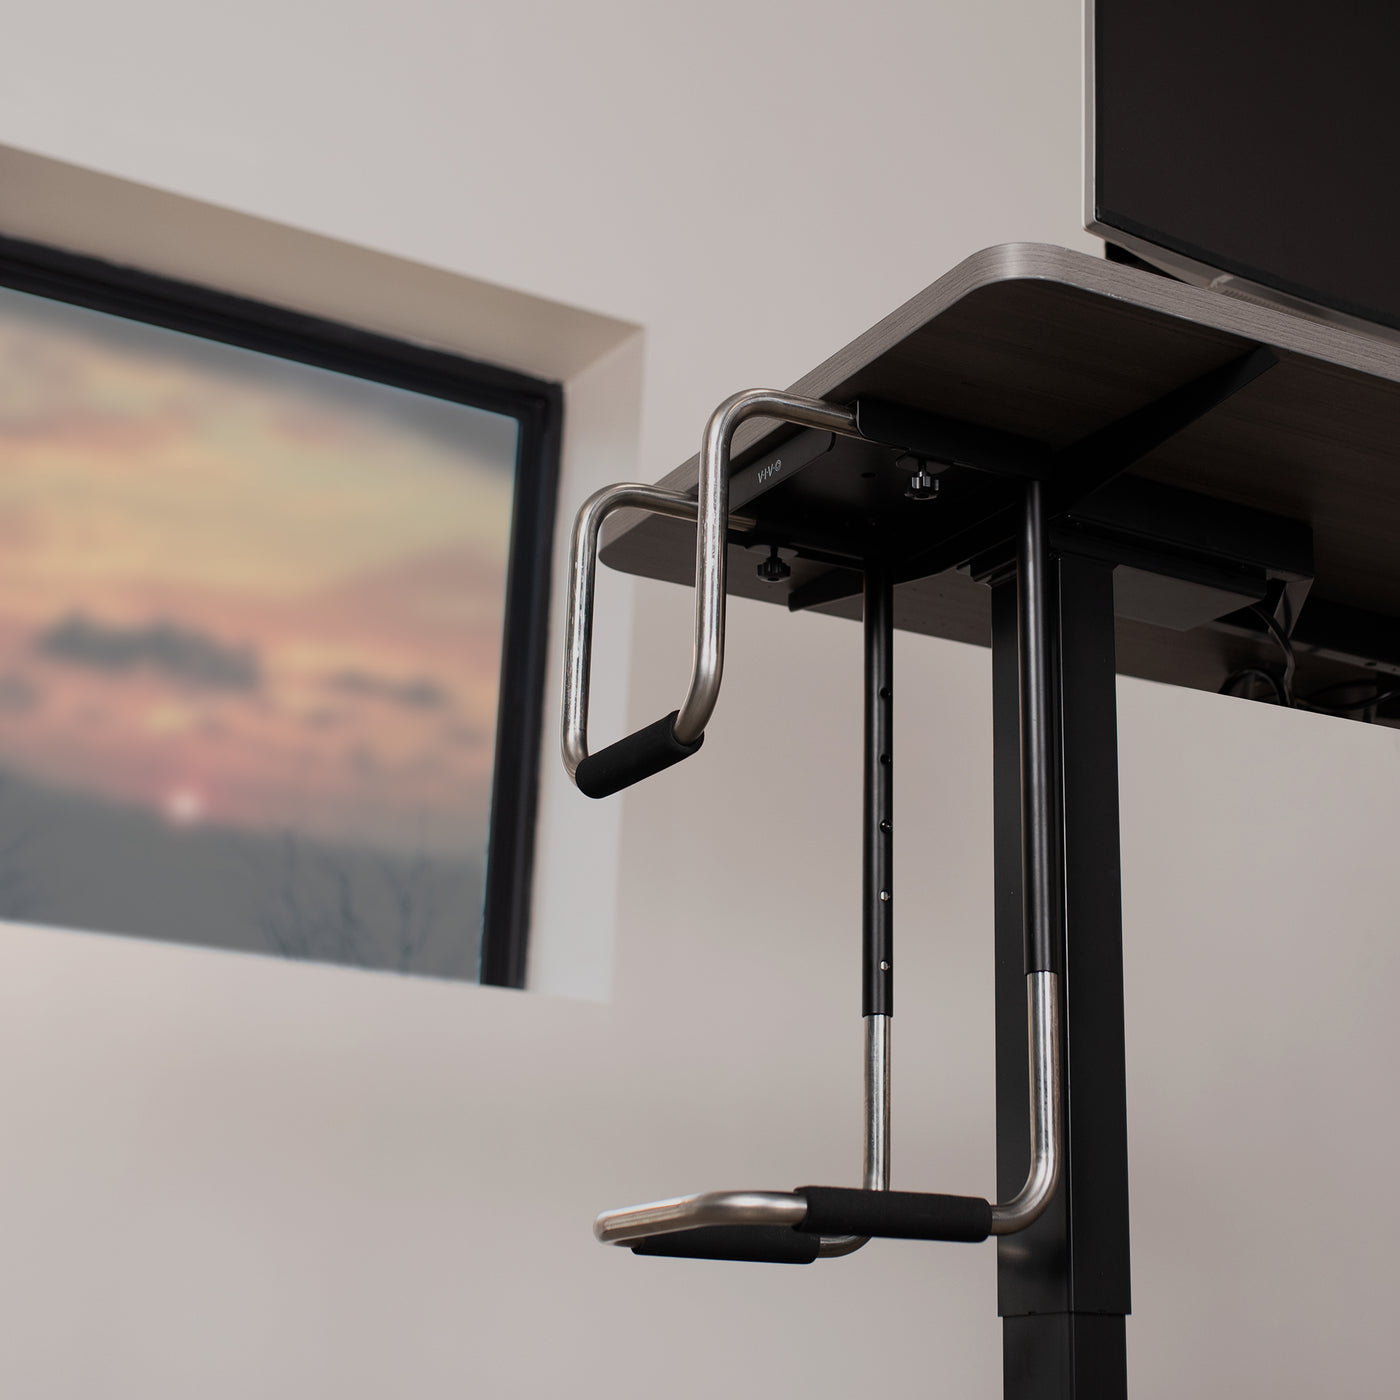 PC holder for desk side board or wall mount or under desk - Computer Tower  Stands - TV Mounts